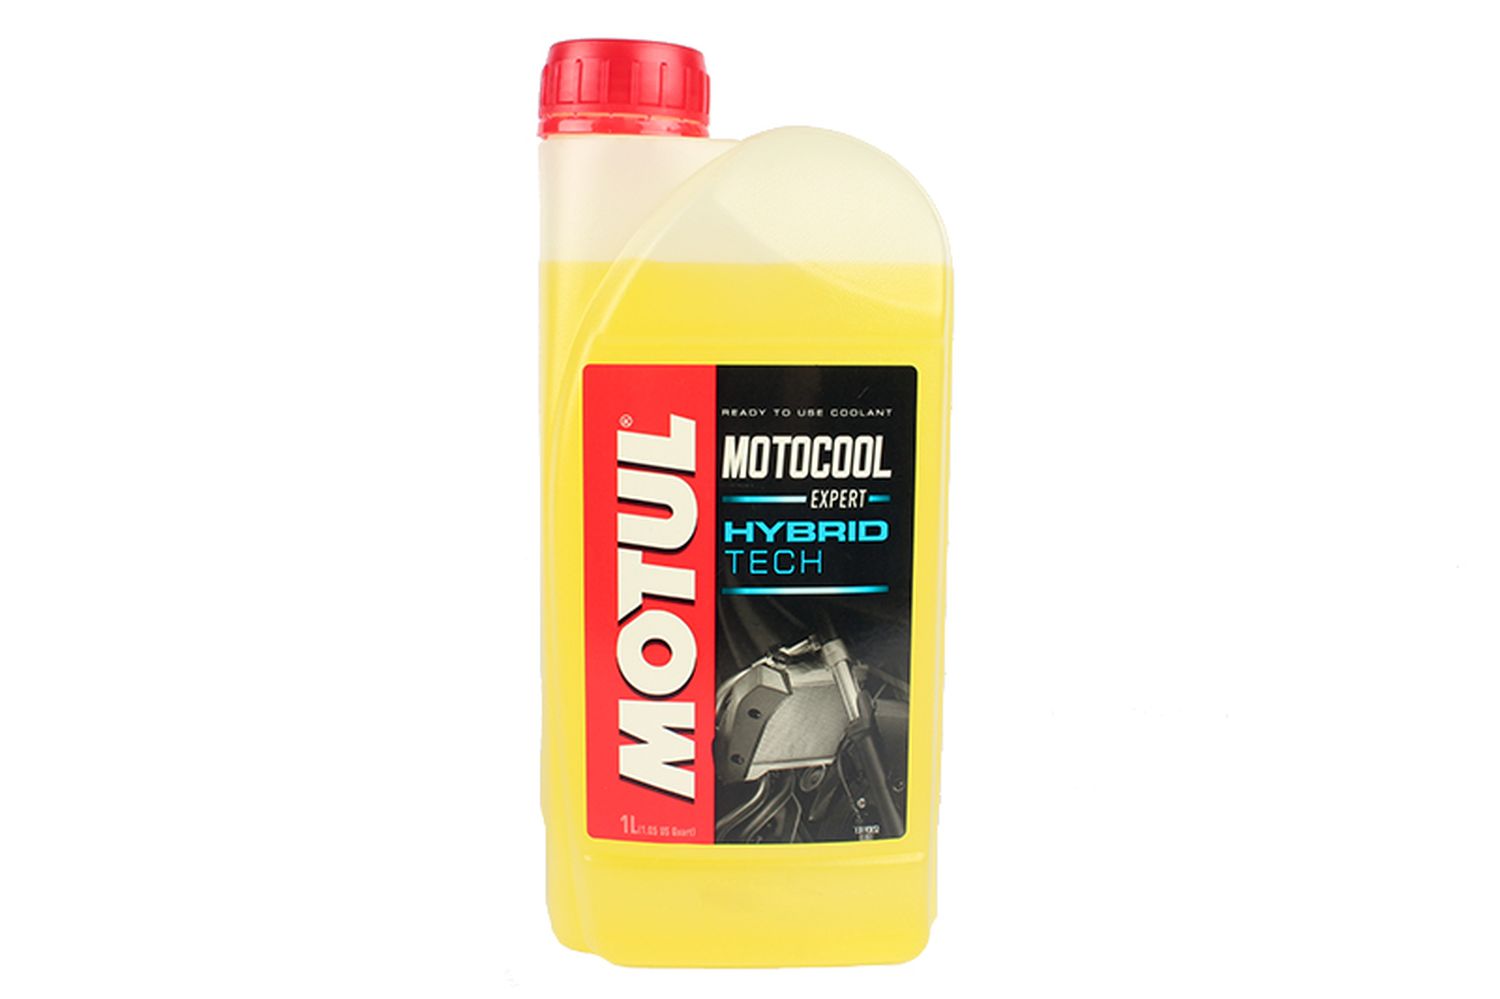 Антифриз MOTUL Motocool Expert G13 желтый готовый антифриз 1л